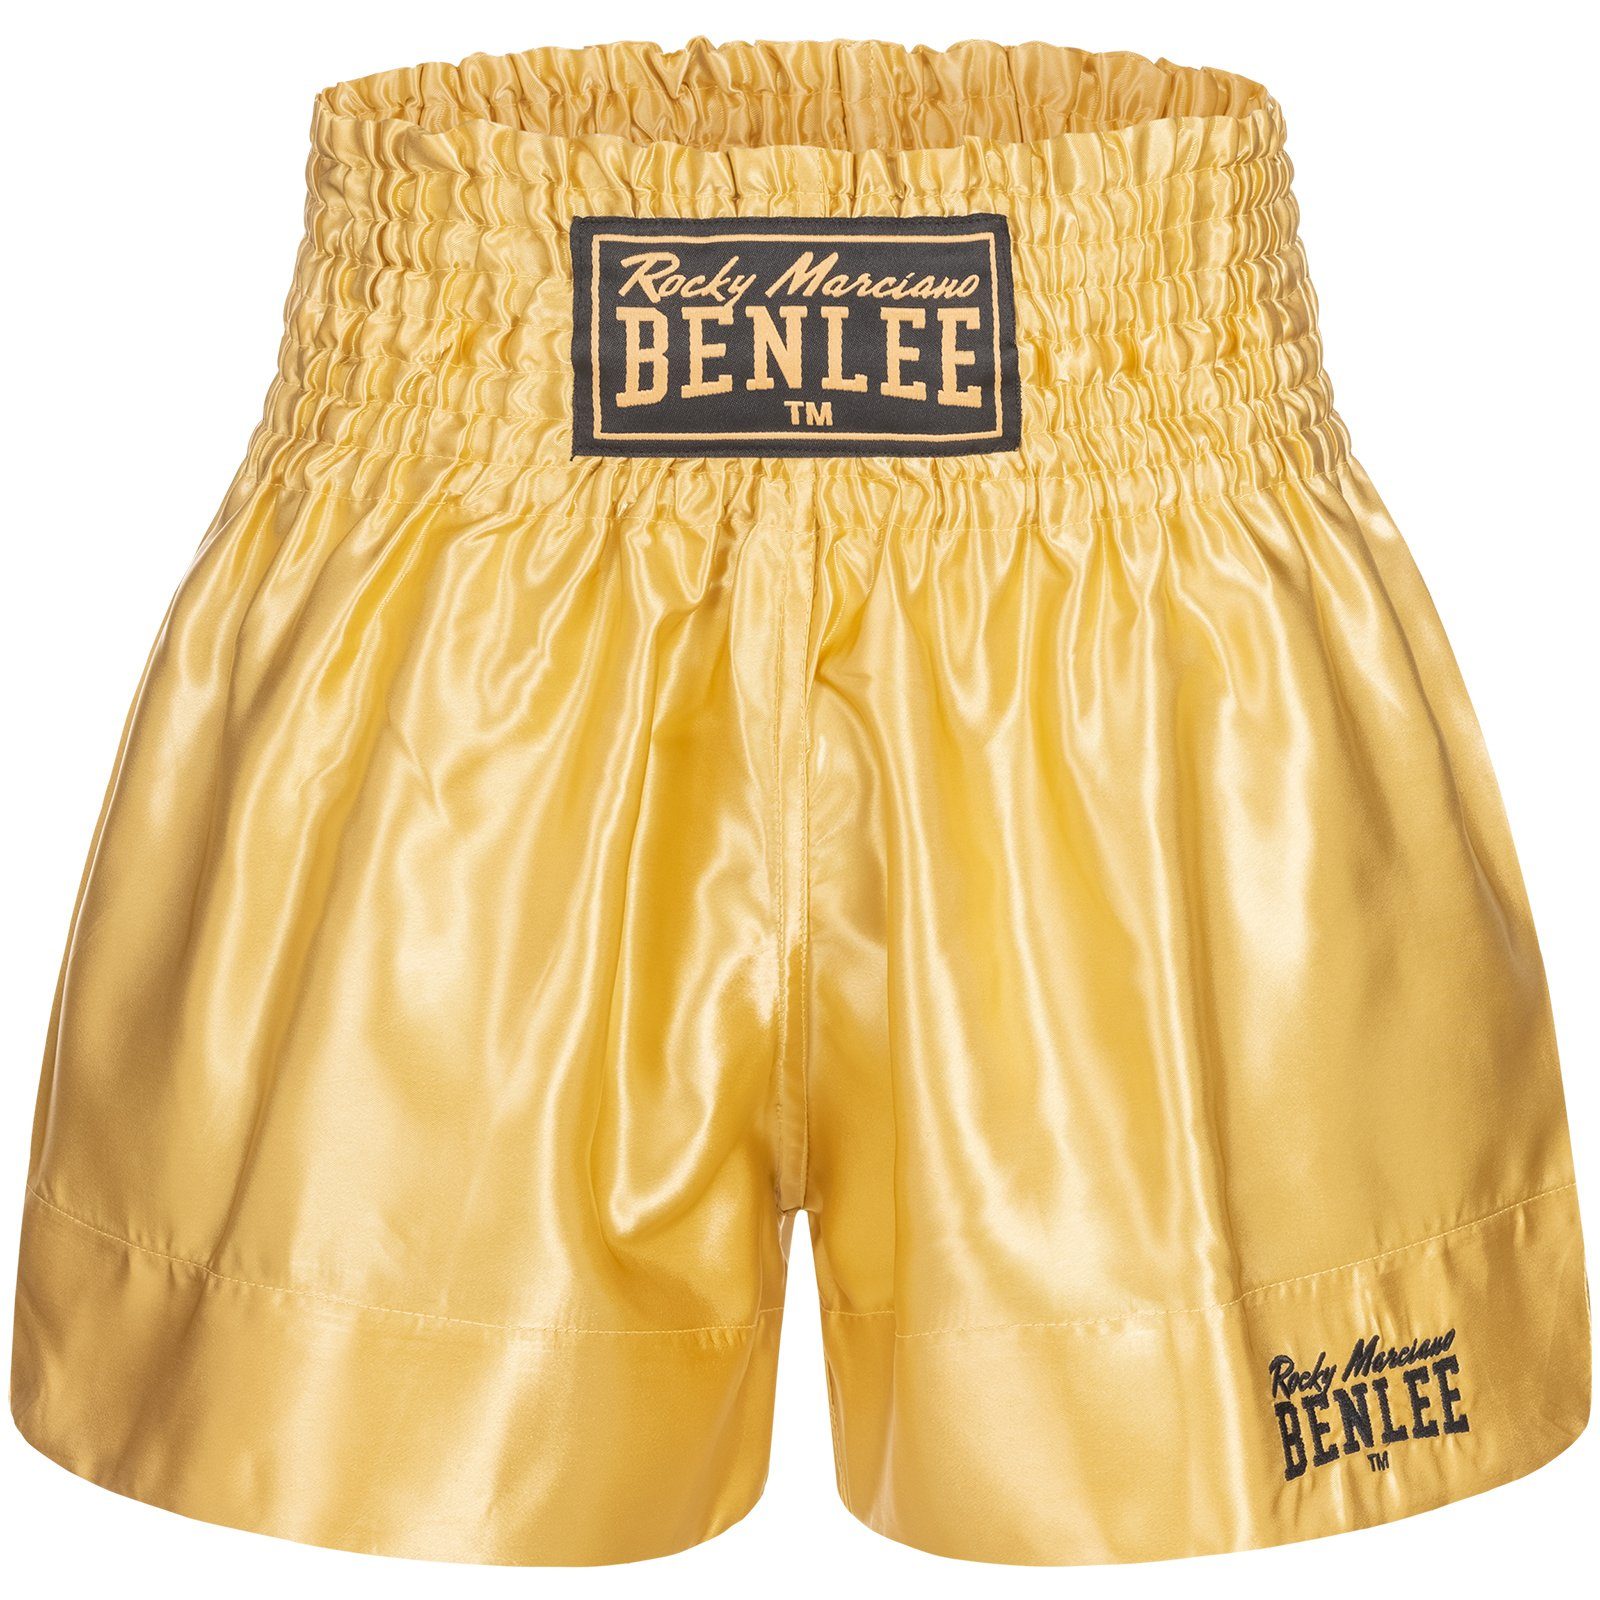 Benlee Rocky Benlee gold Sporthose Thai Uni Kampfsporthose Marciano